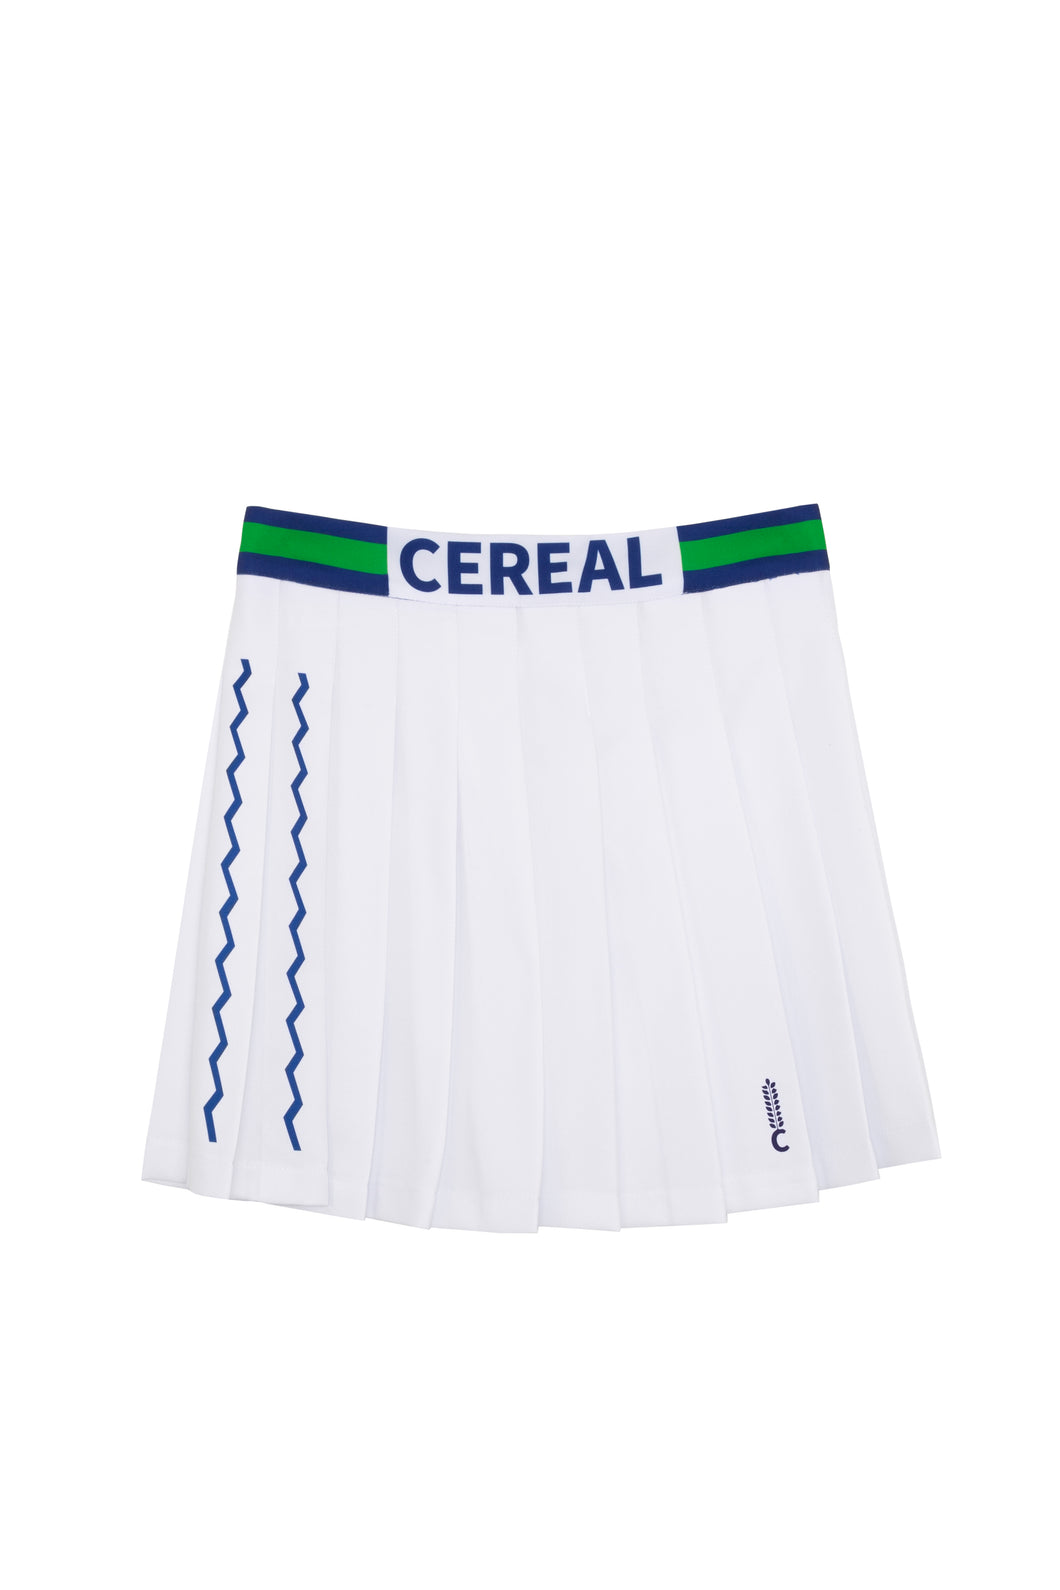 Cereal Tennis Skirt